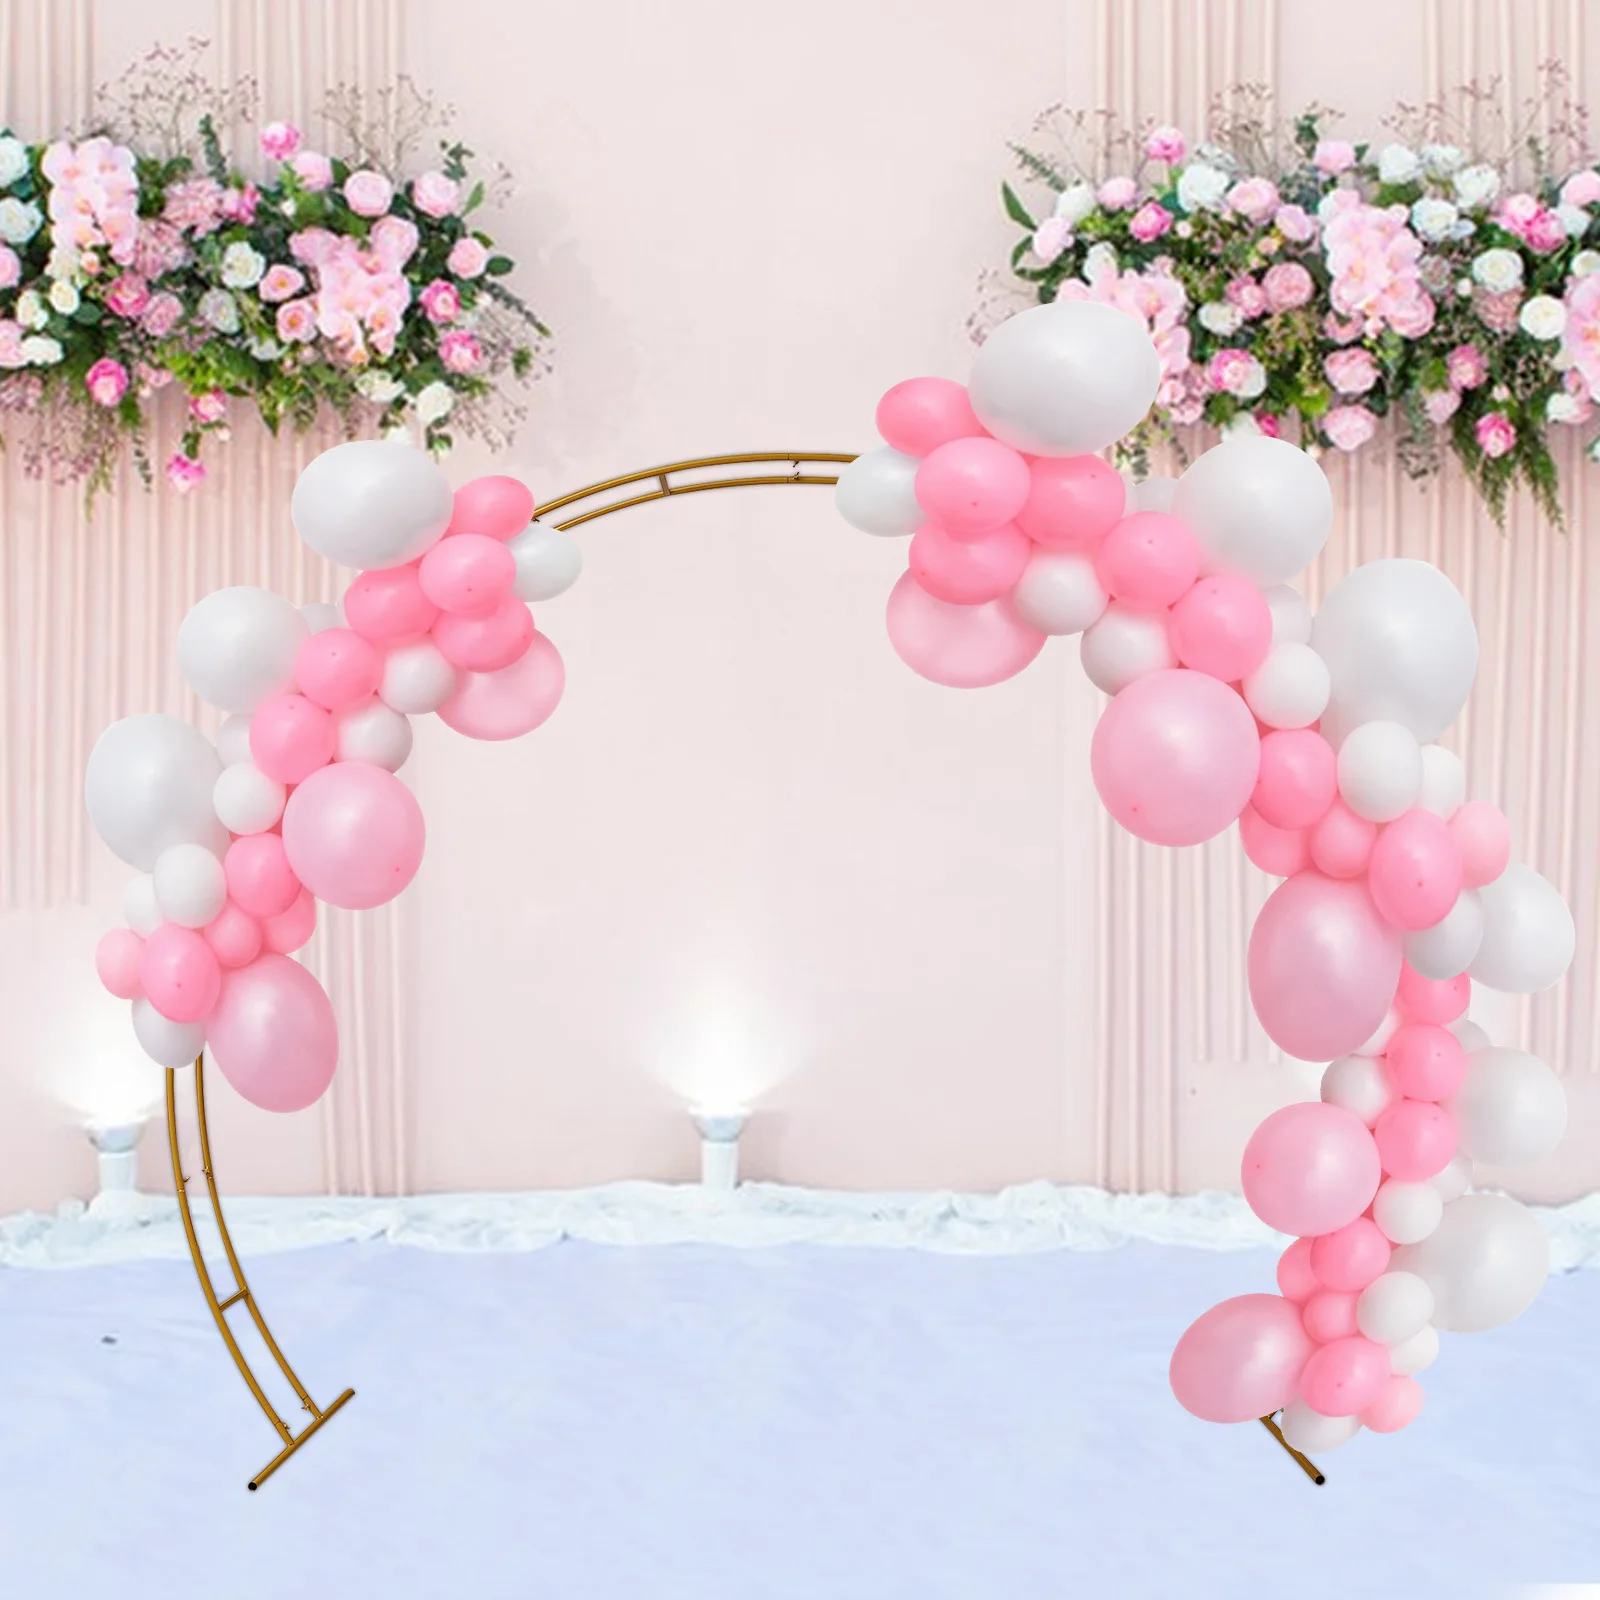 Wedding Backdrop Stand Round Metal Iron Arch Bday Party Birthday Decor Flower Balloon Decor